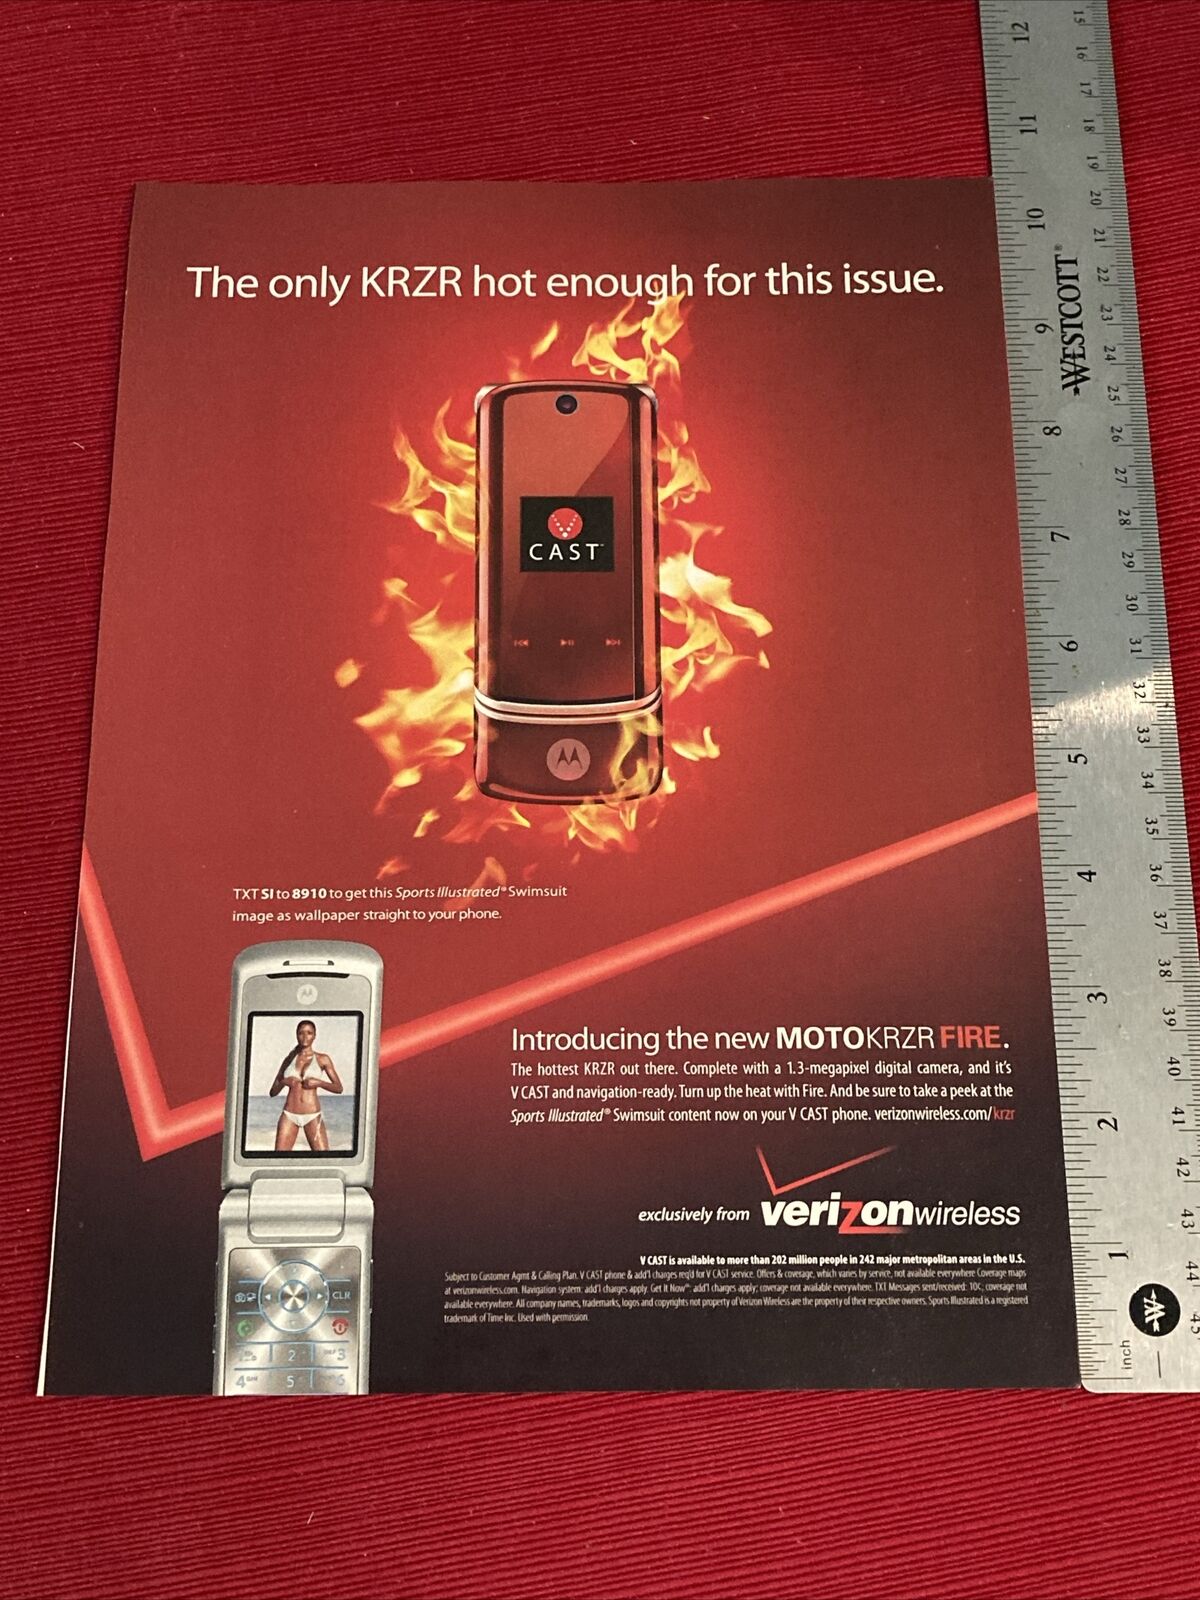 MOTO KRZR Fire Phone Verizon Wireless 2007 Print Ad